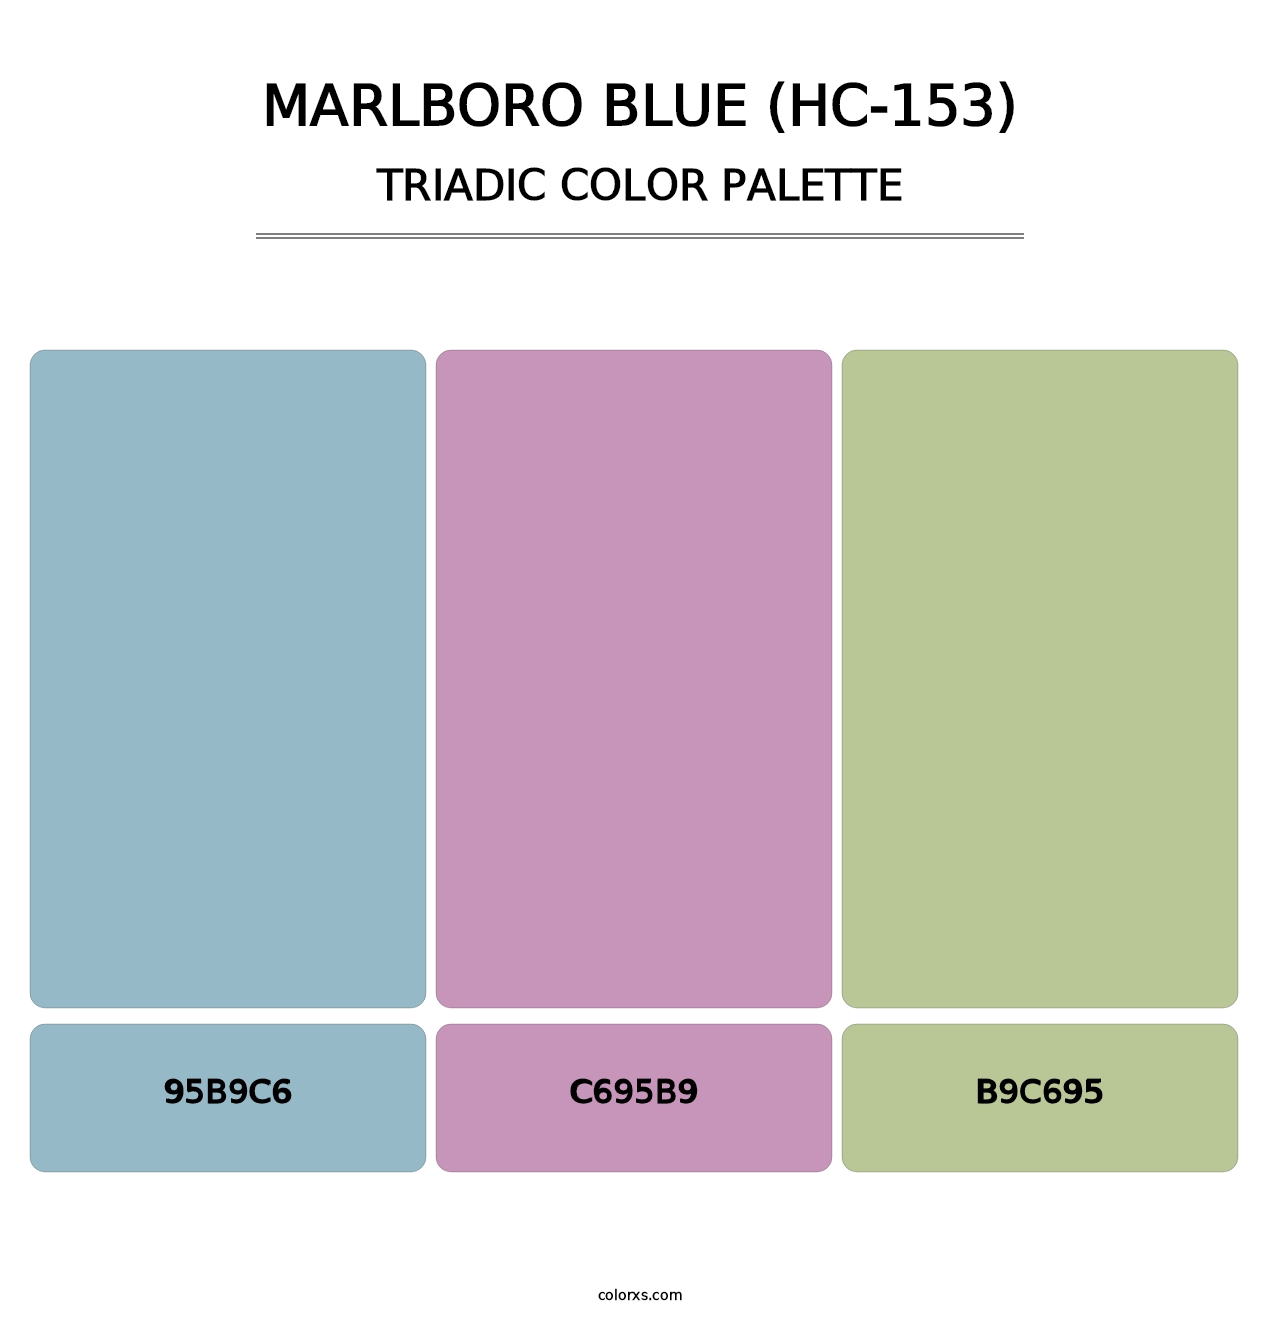 Marlboro Blue (HC-153) - Triadic Color Palette